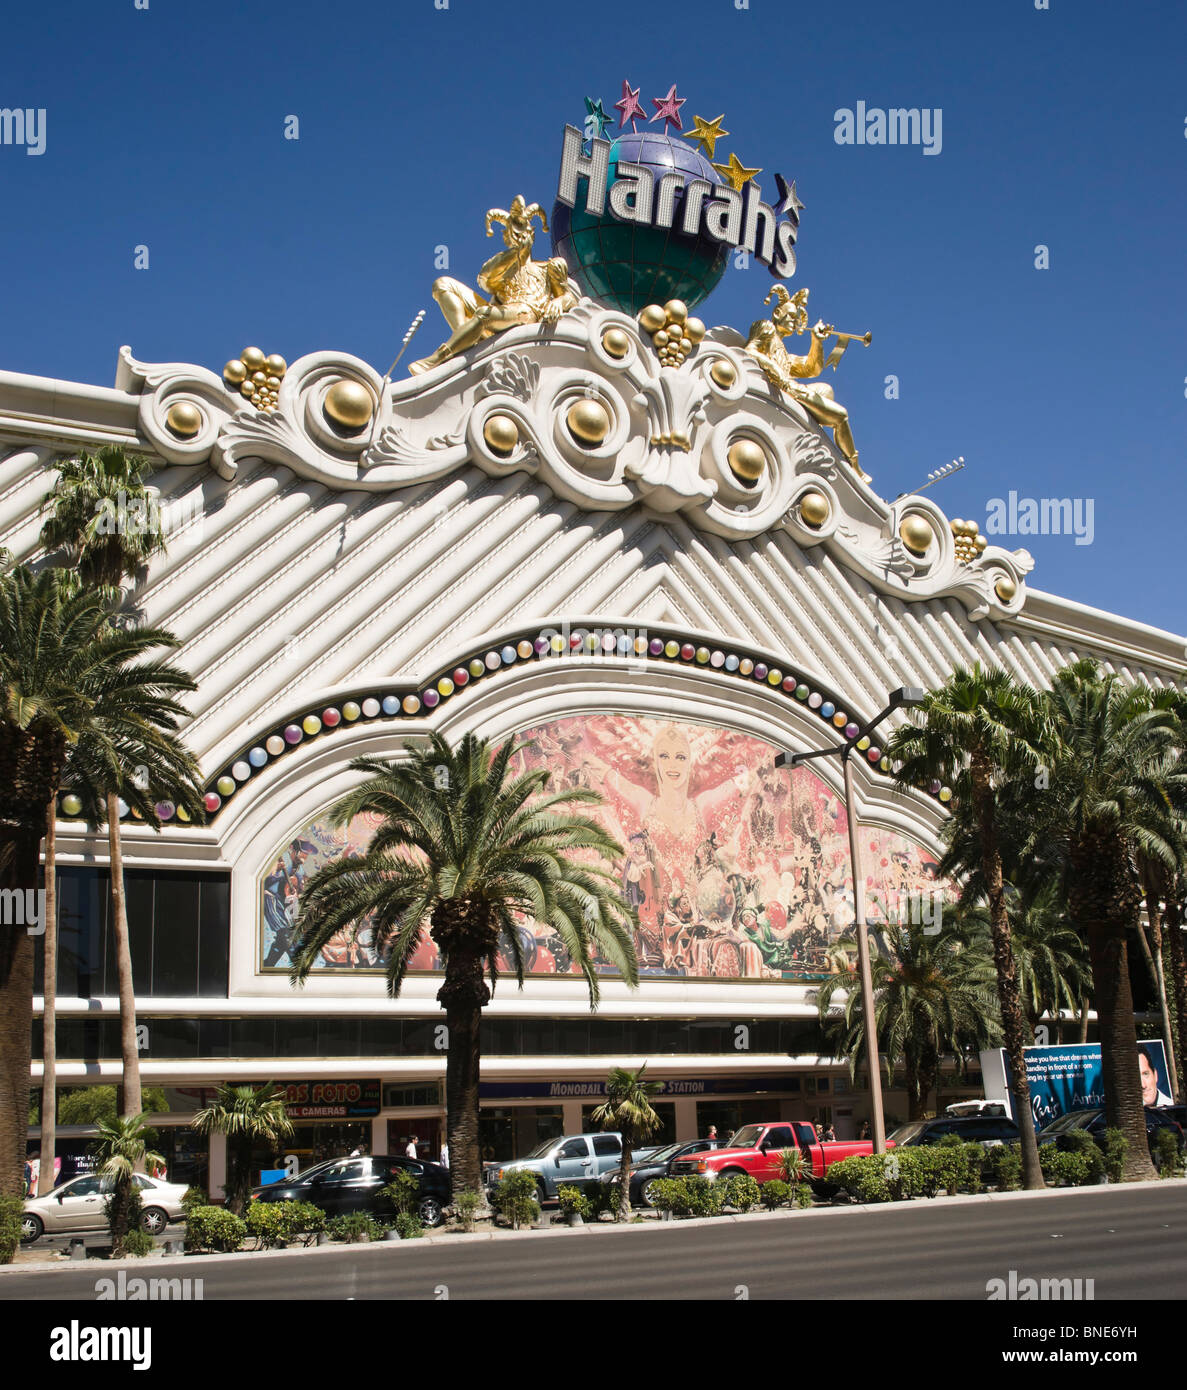 Harrah's Hotel and Casino Las Vegas strip Stock Photo